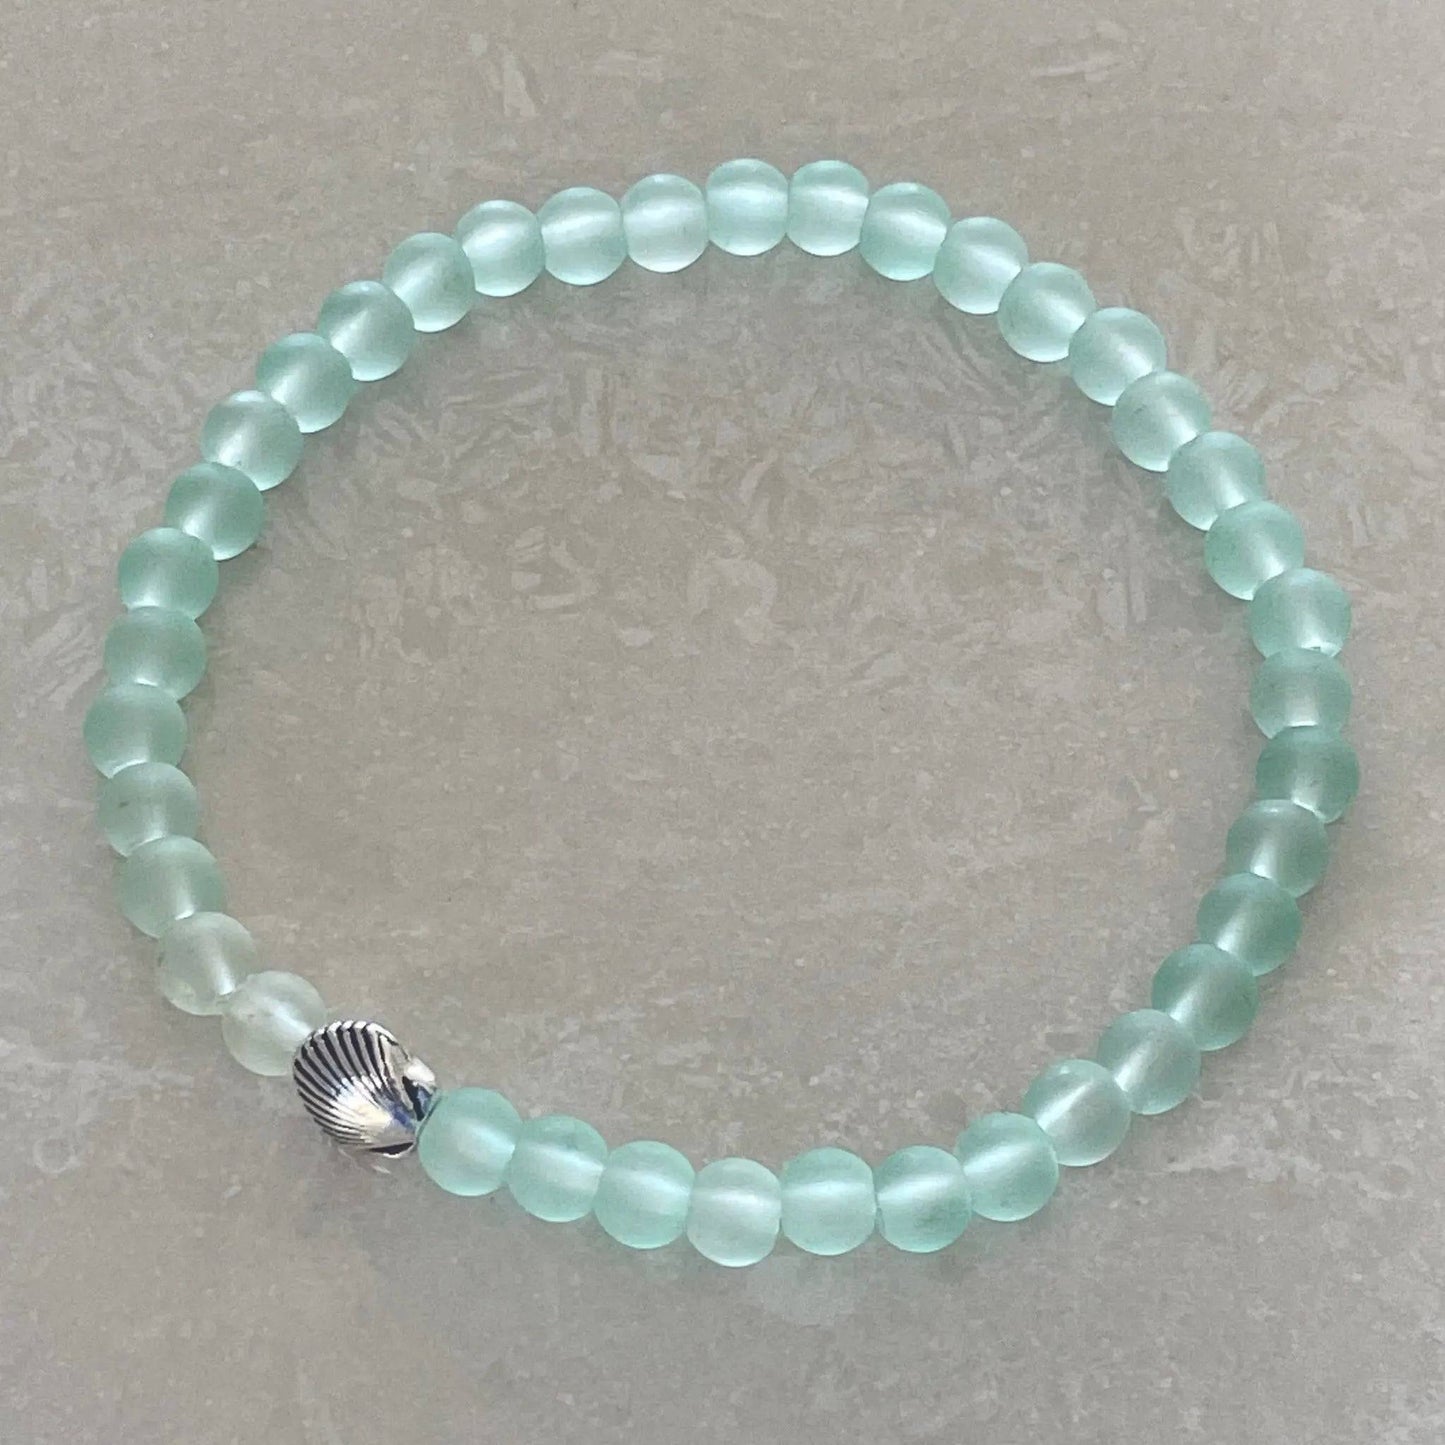 Scallop Charm Bracelet - Uplift Beads